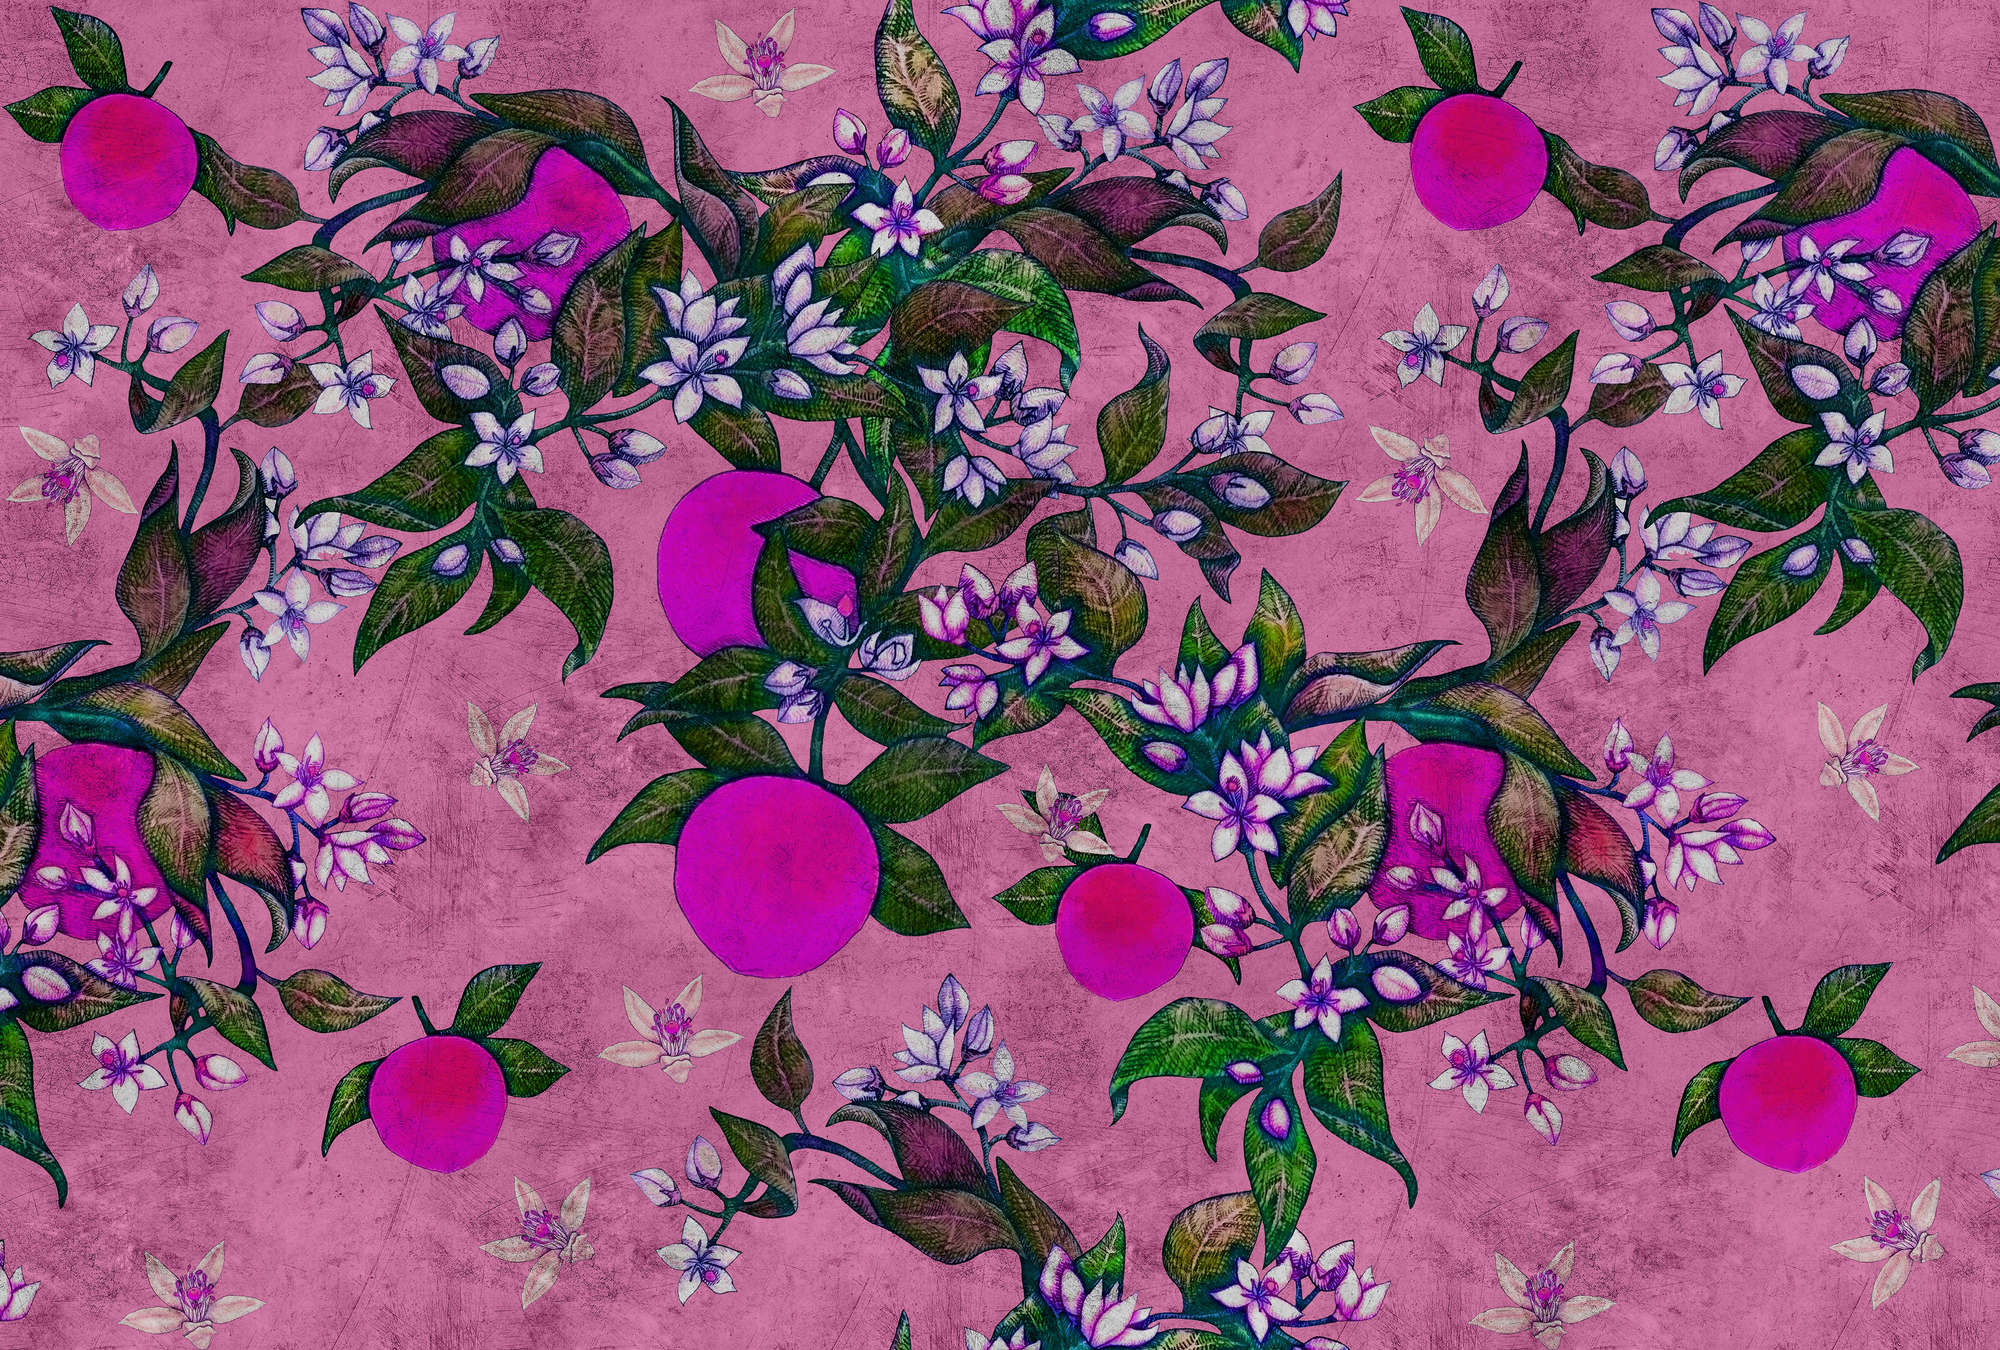             Grapefruit Tree 2 - Photo wallpaper with grapefruit & flower design in scratchy texture - Pink, Purple | Pearl smooth fleece
        